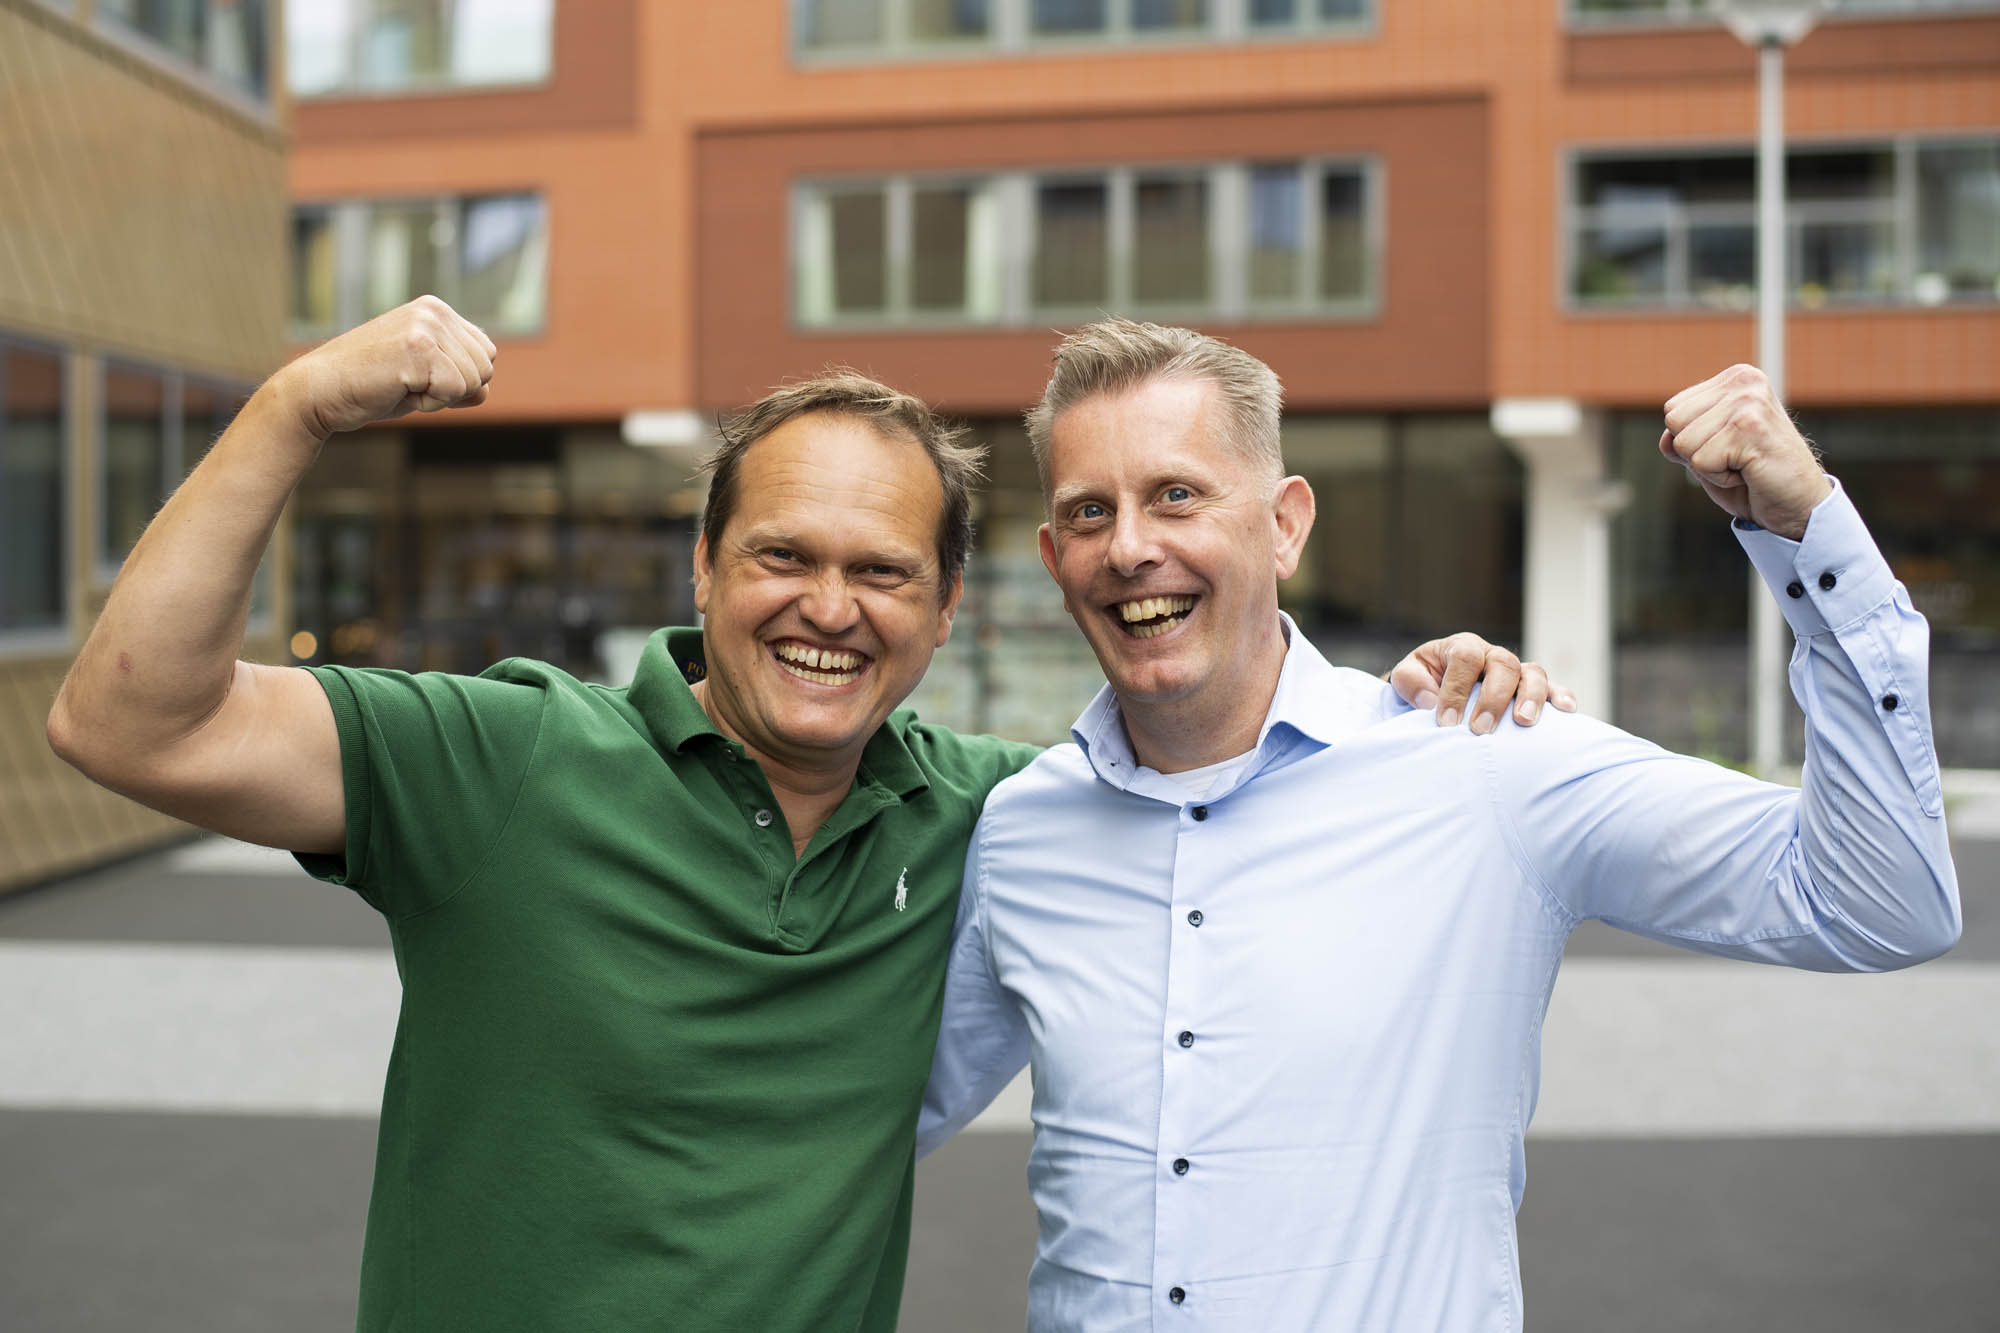 Martijn Rademakers and Patrick Veling, founders of SoWorker